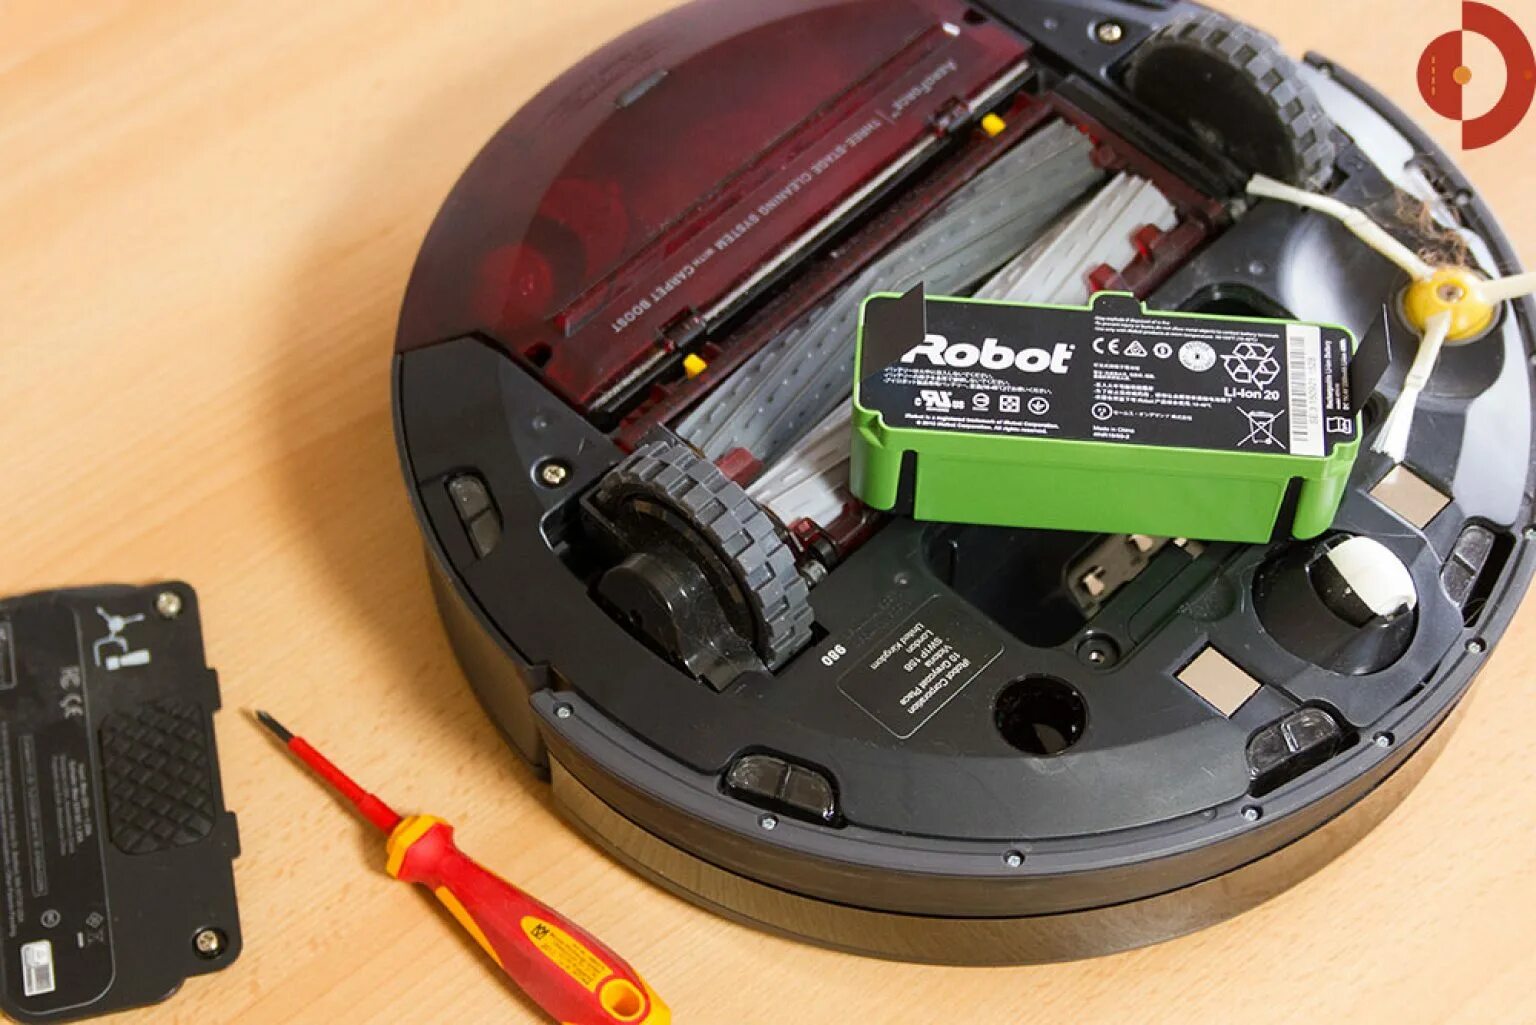 Irobot roomba аккумулятор купить. IROBOT Roomba 980. IROBOT Roomba 900. IROBOT Roomba 770 аккумулятор. Roomba 606 аккумулятор.